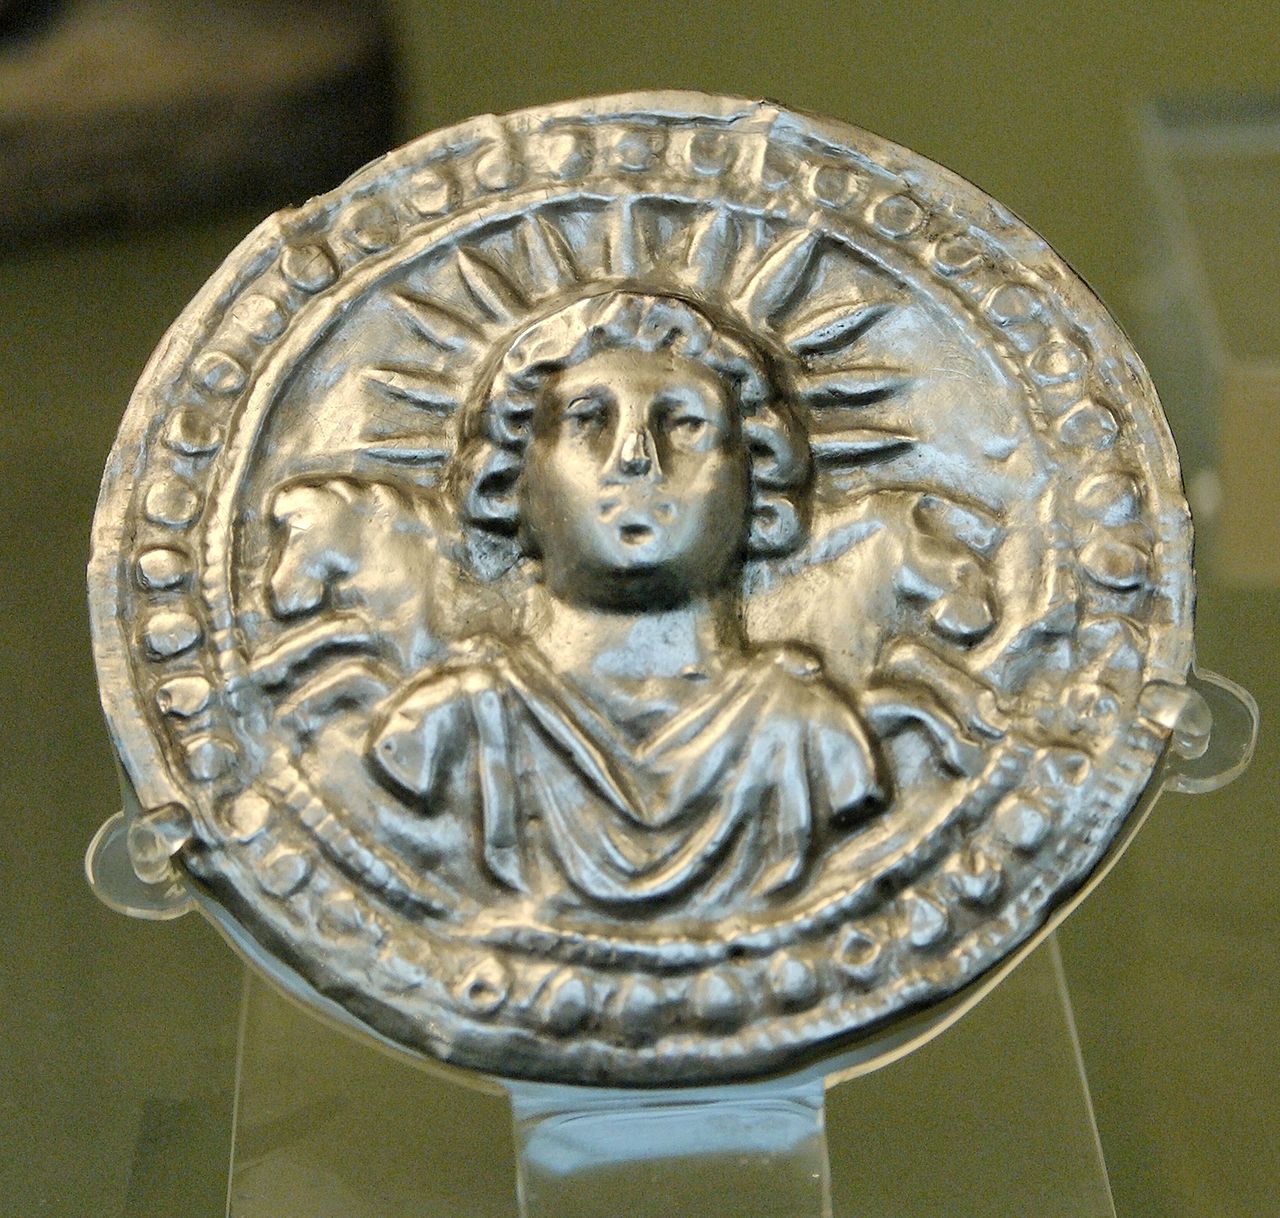 Roman goddess libertas, inspiration for the statue of liberty